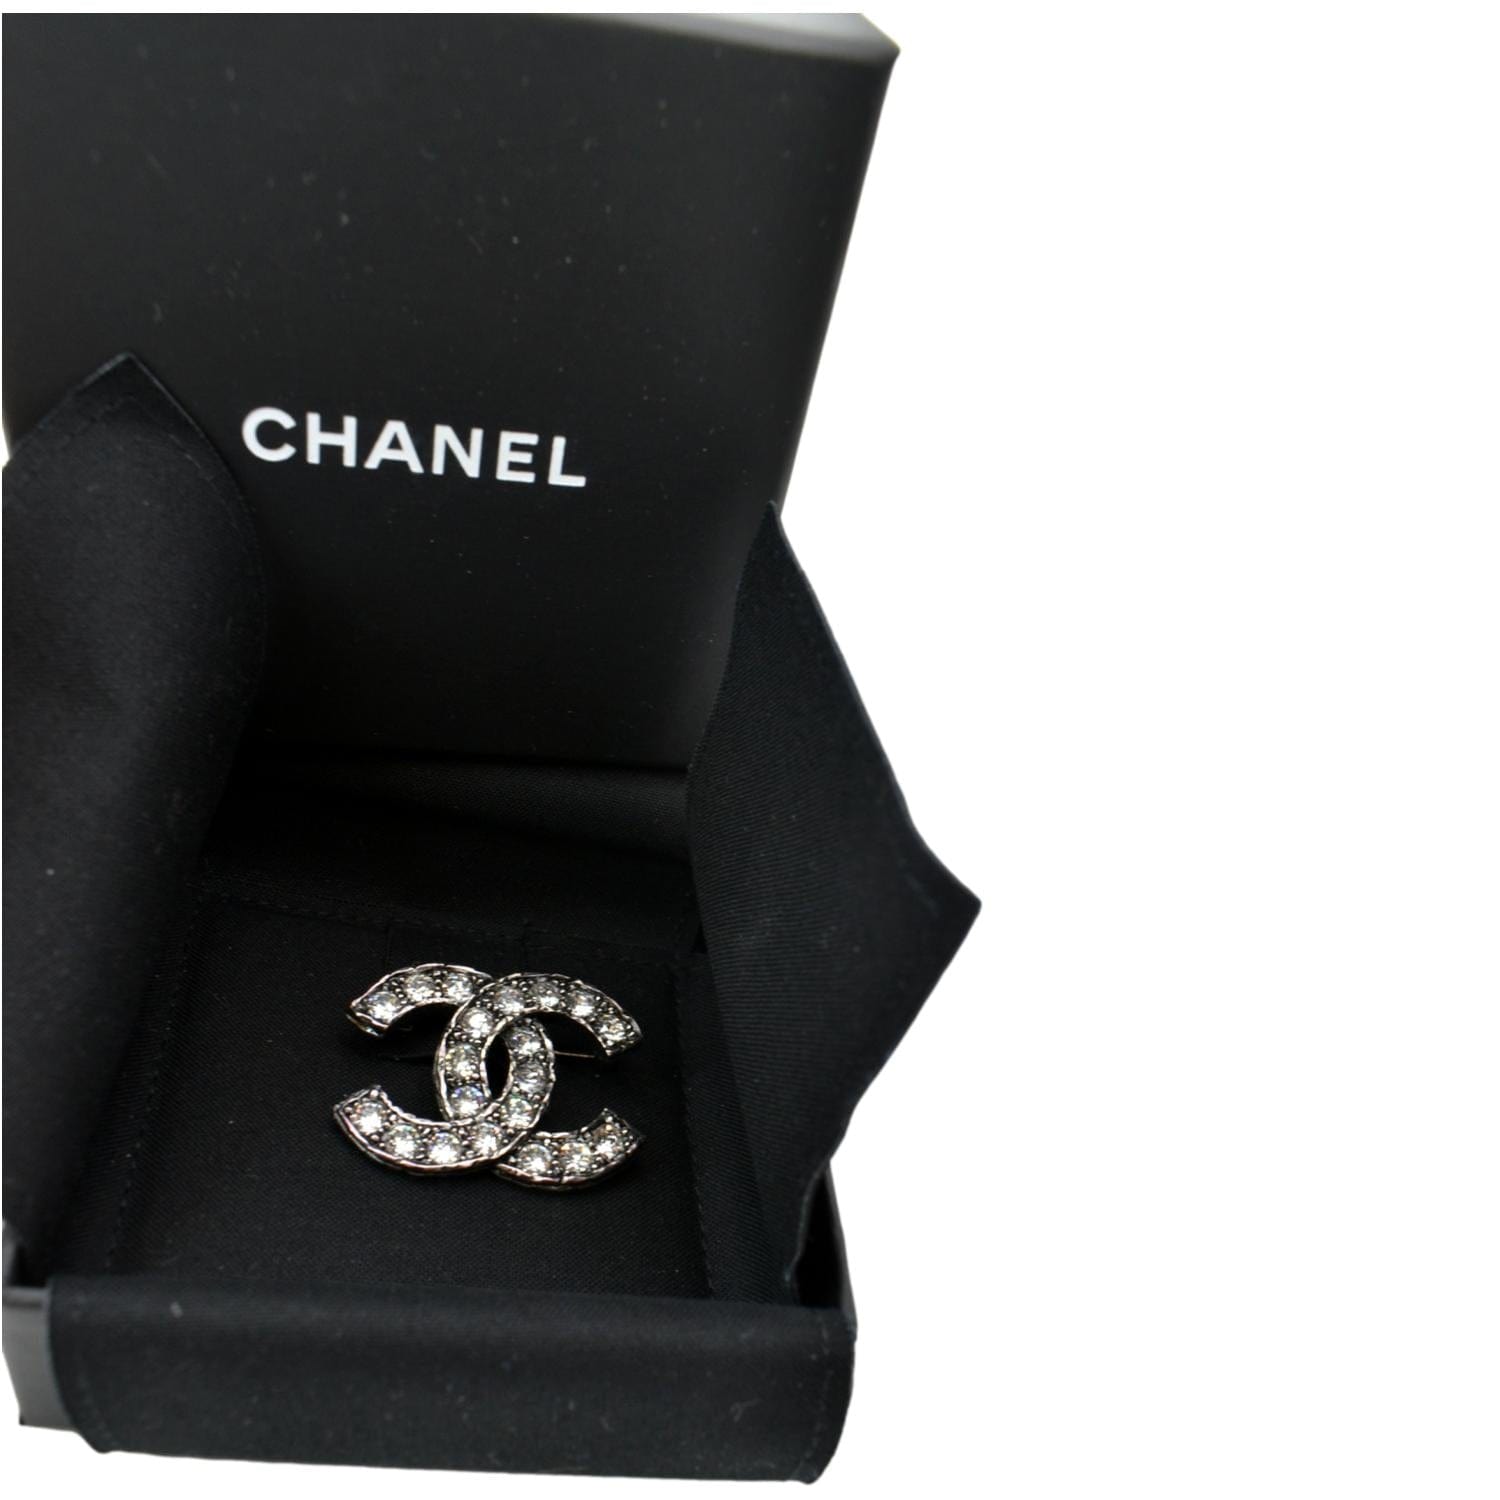 CHANEL, Jewelry, Chanel Brooch